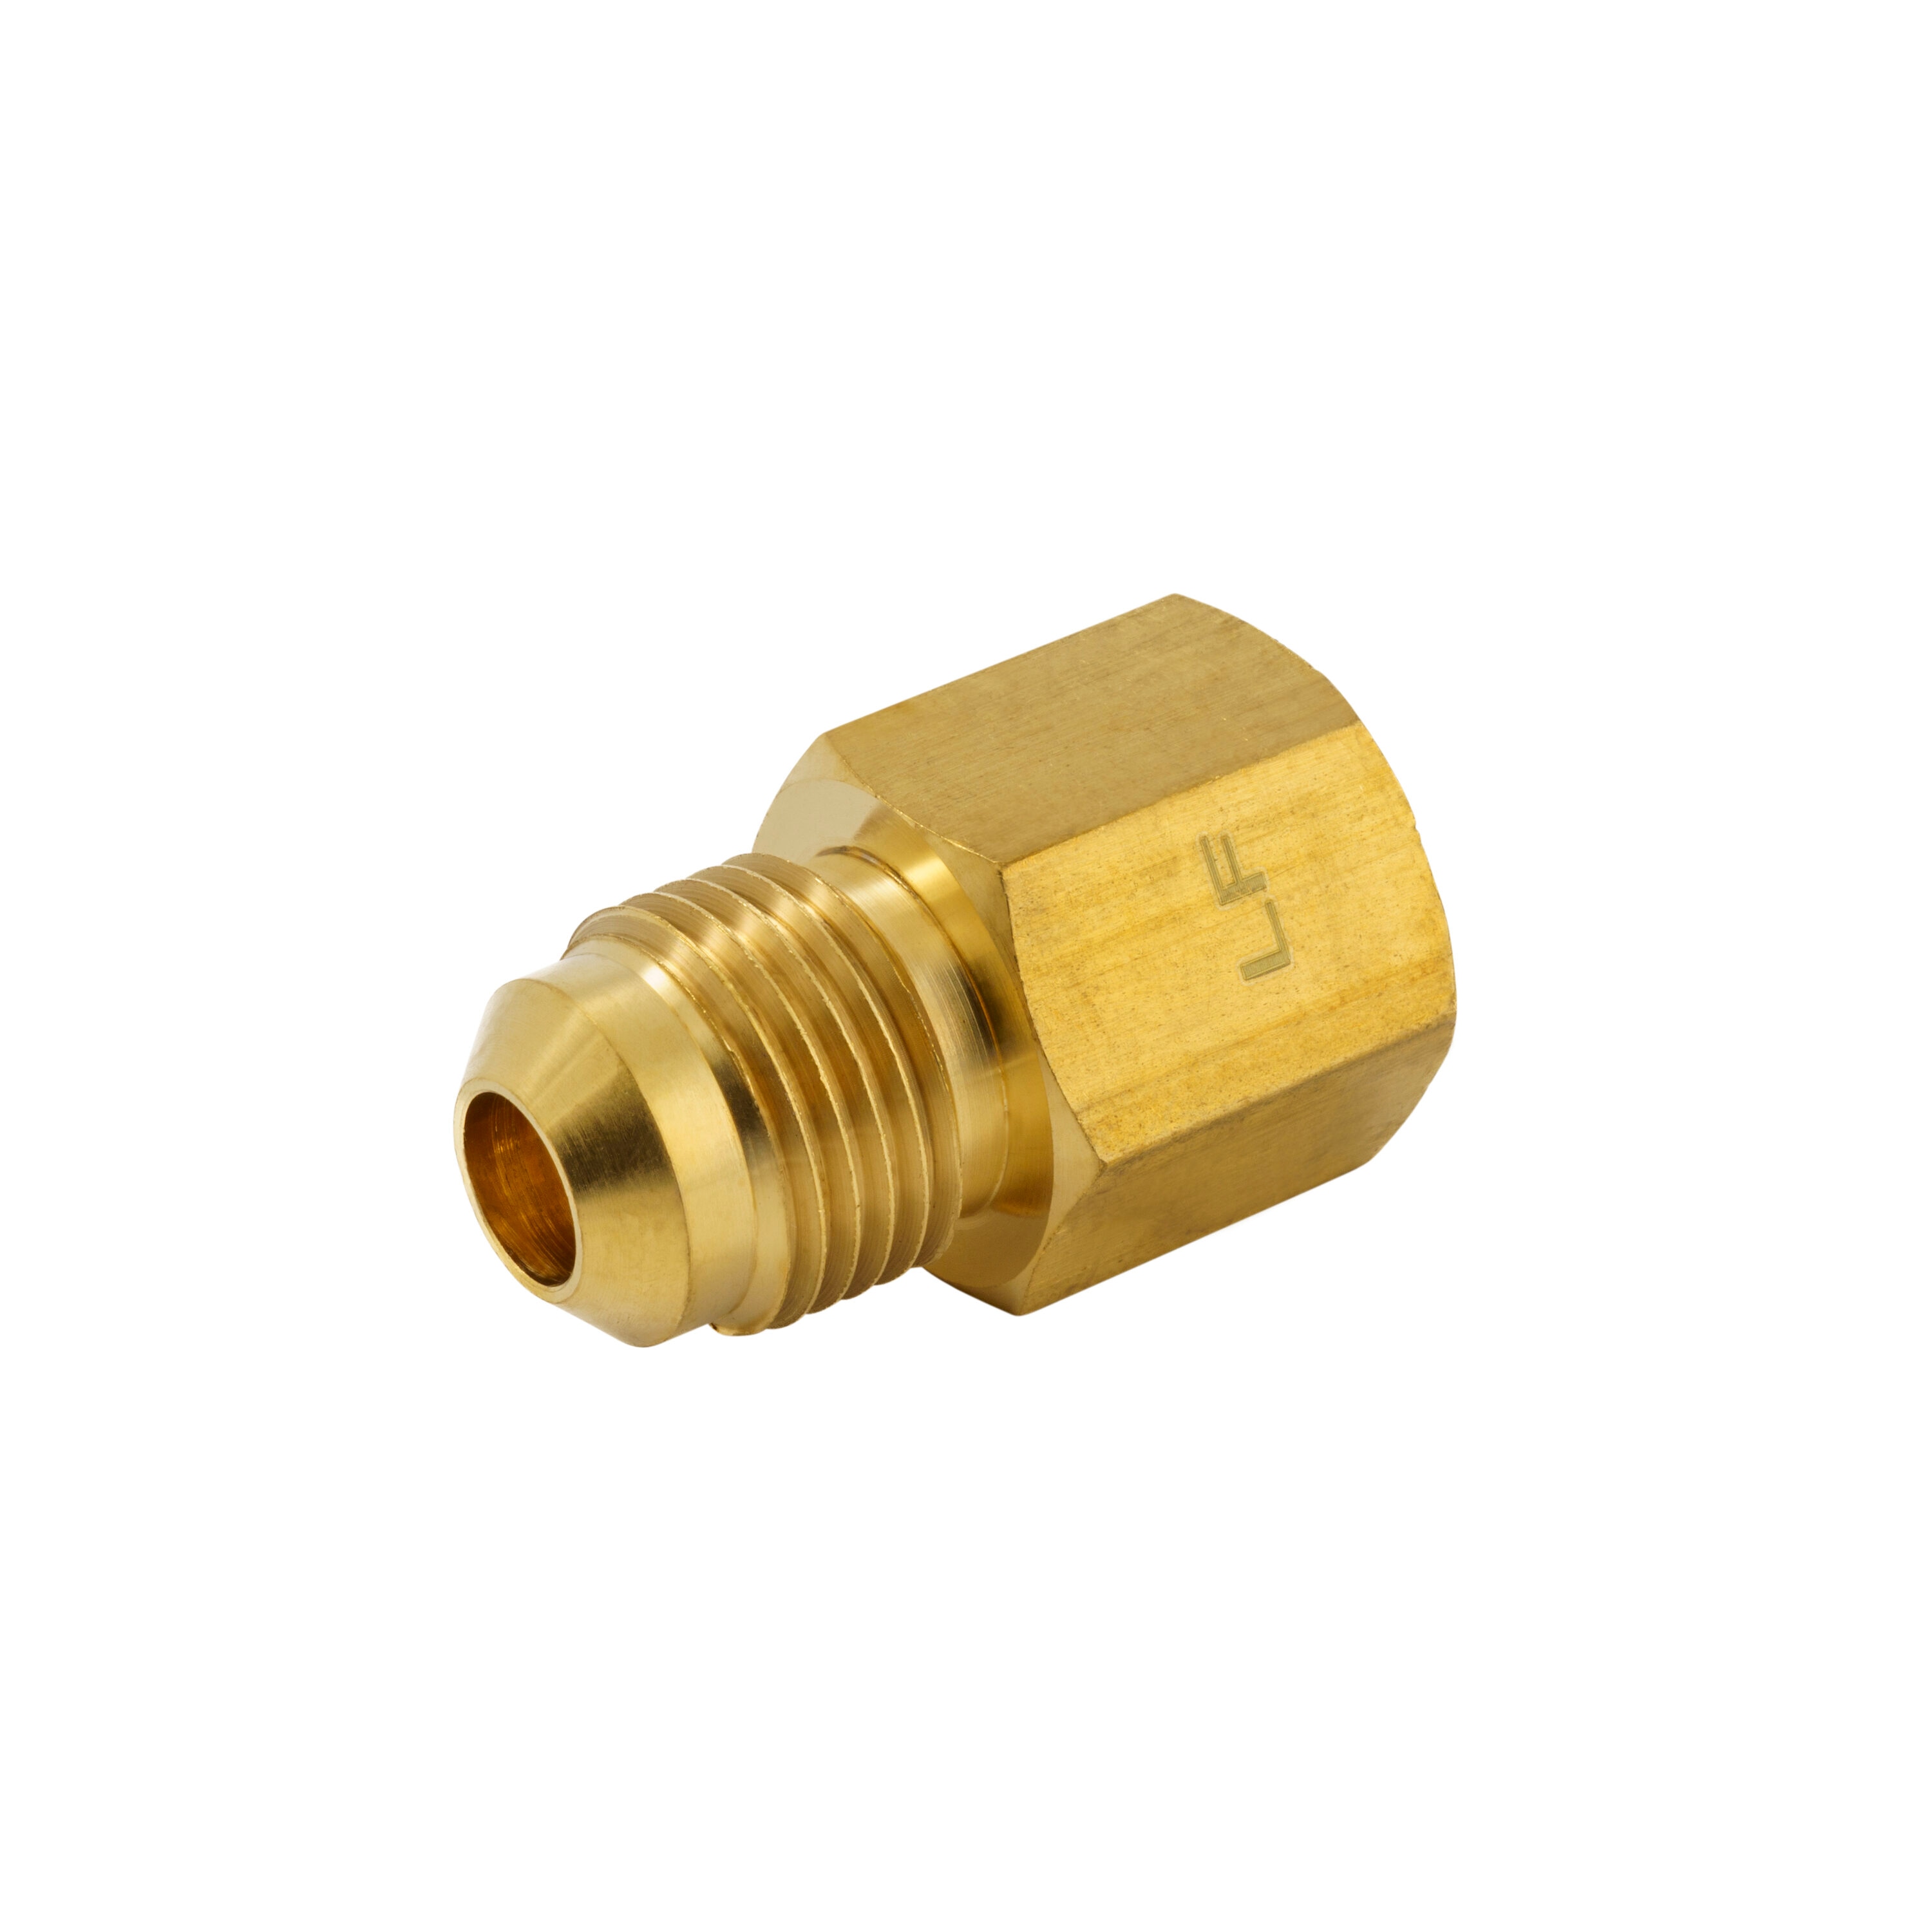 Brass 3/8-in COMP x 3/8-in FL Fine Thread Compression Adapter